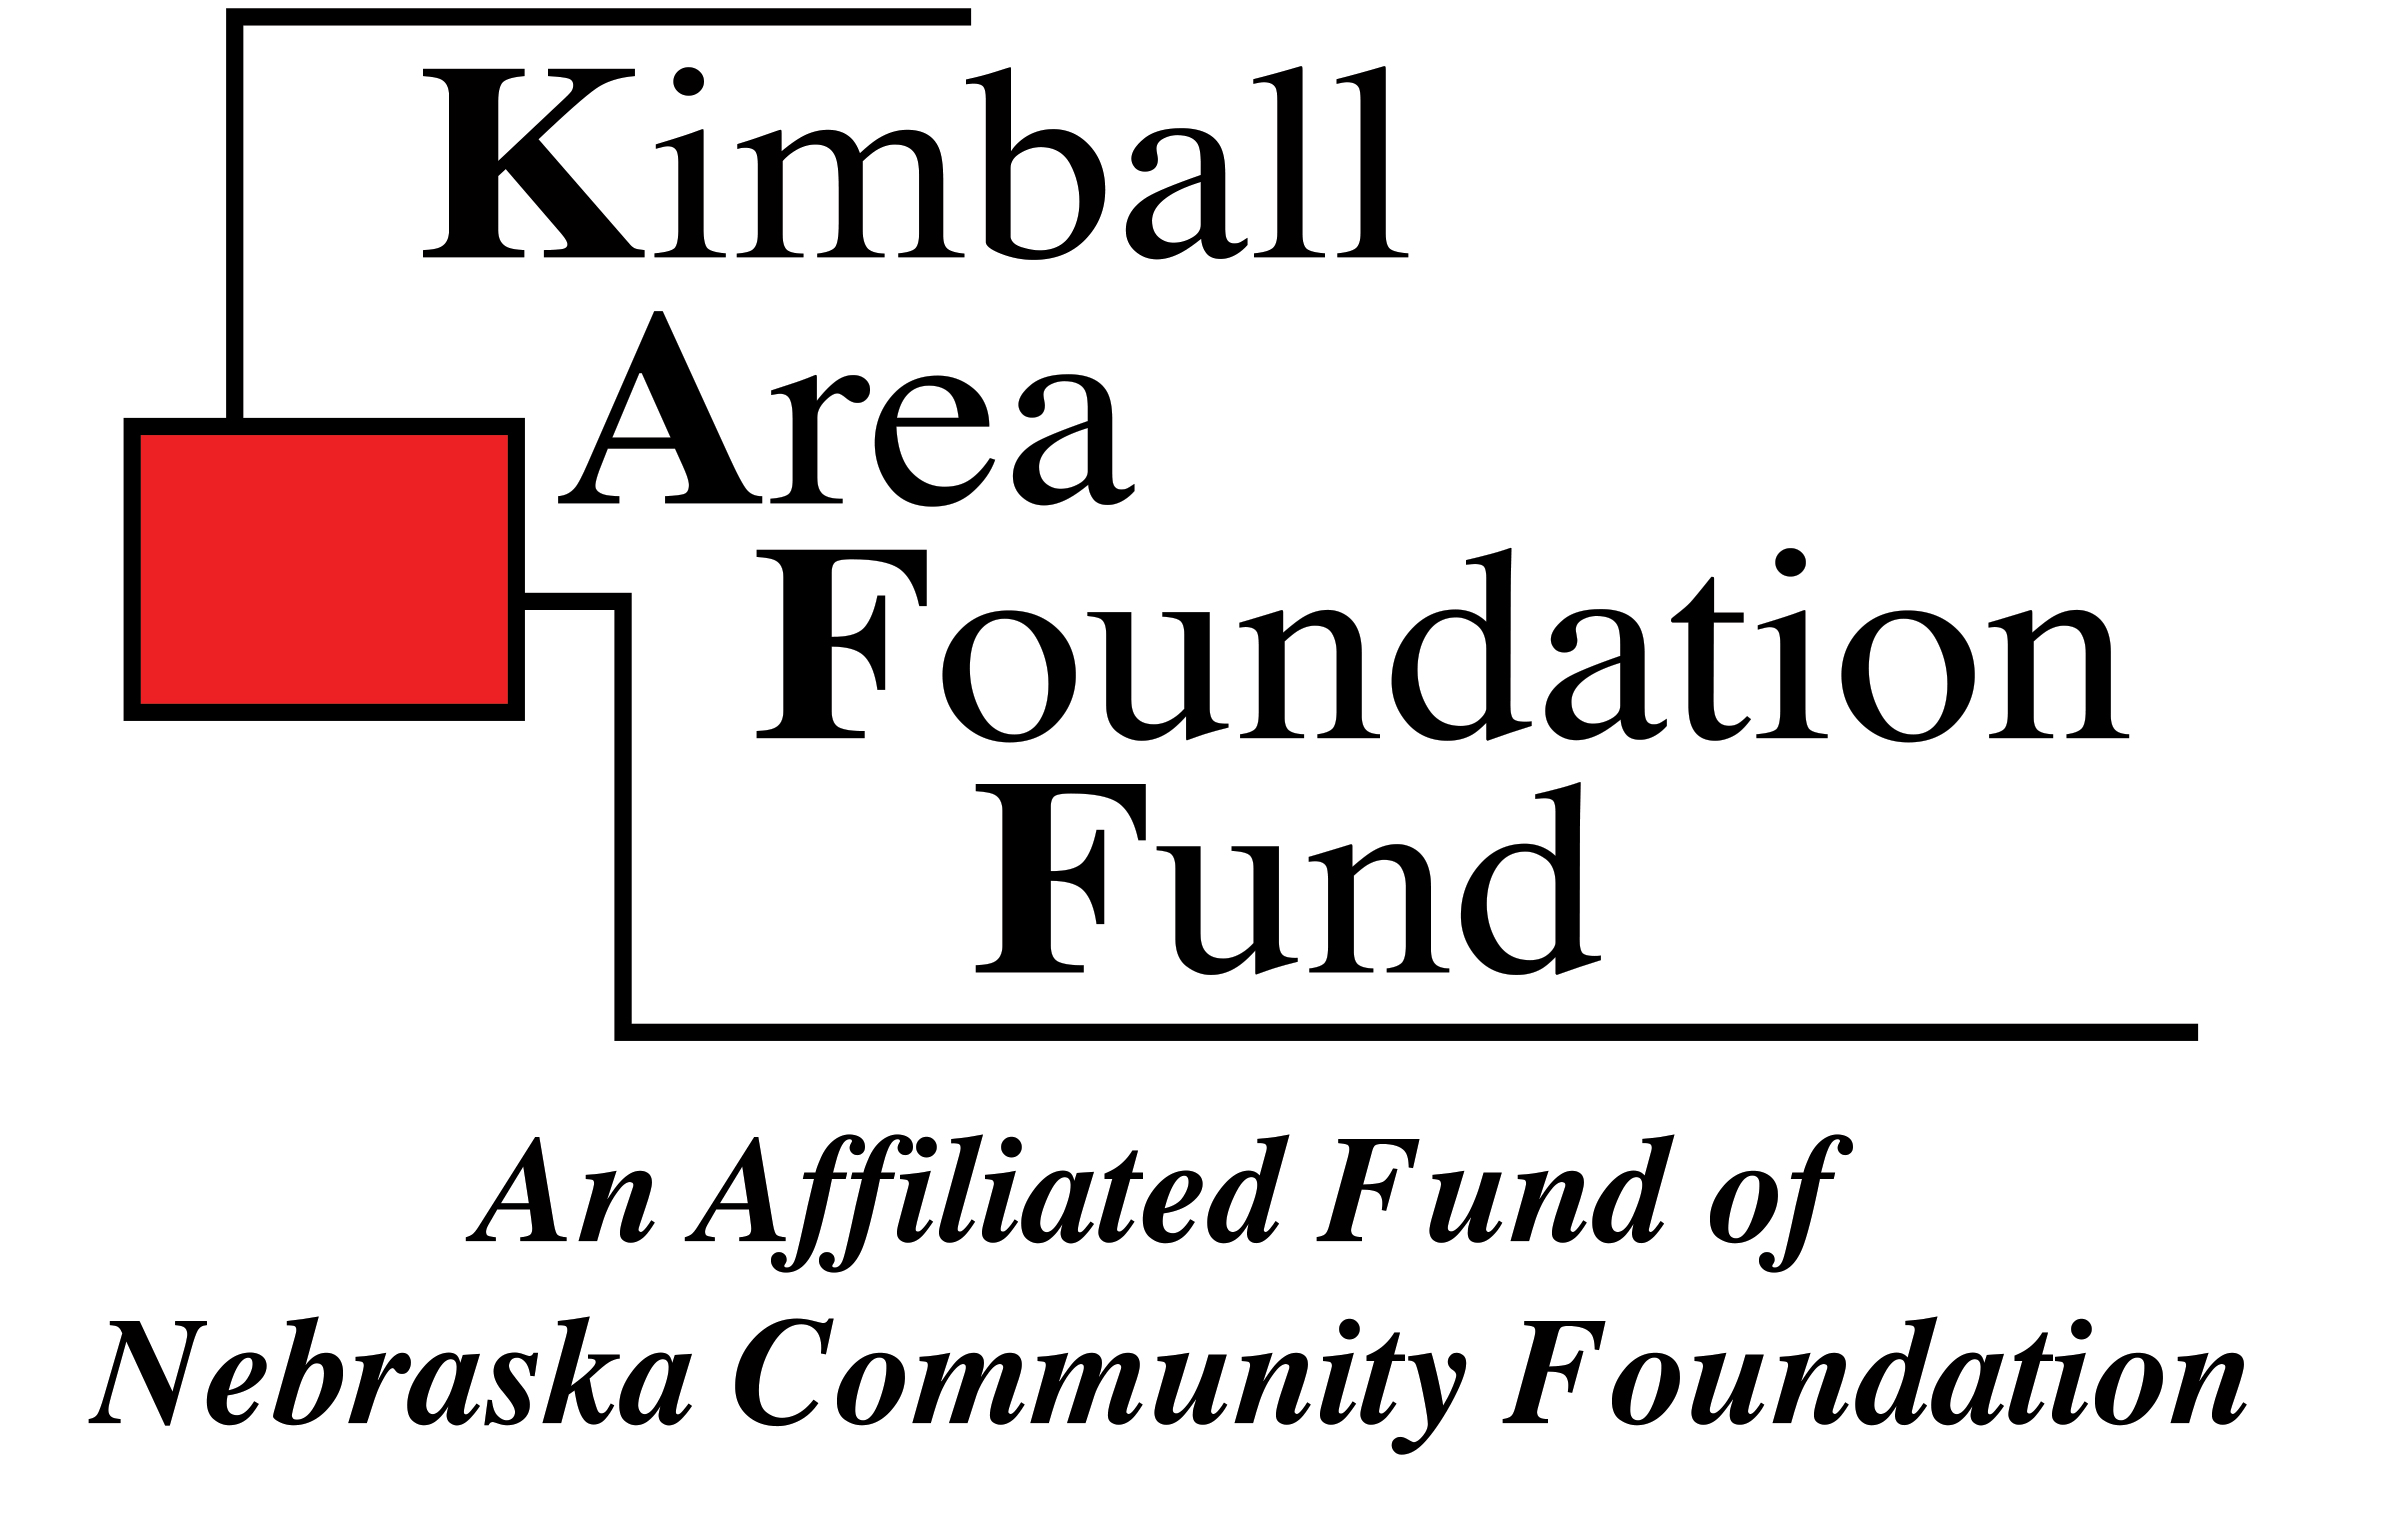 Kimball Area Foundation Fund